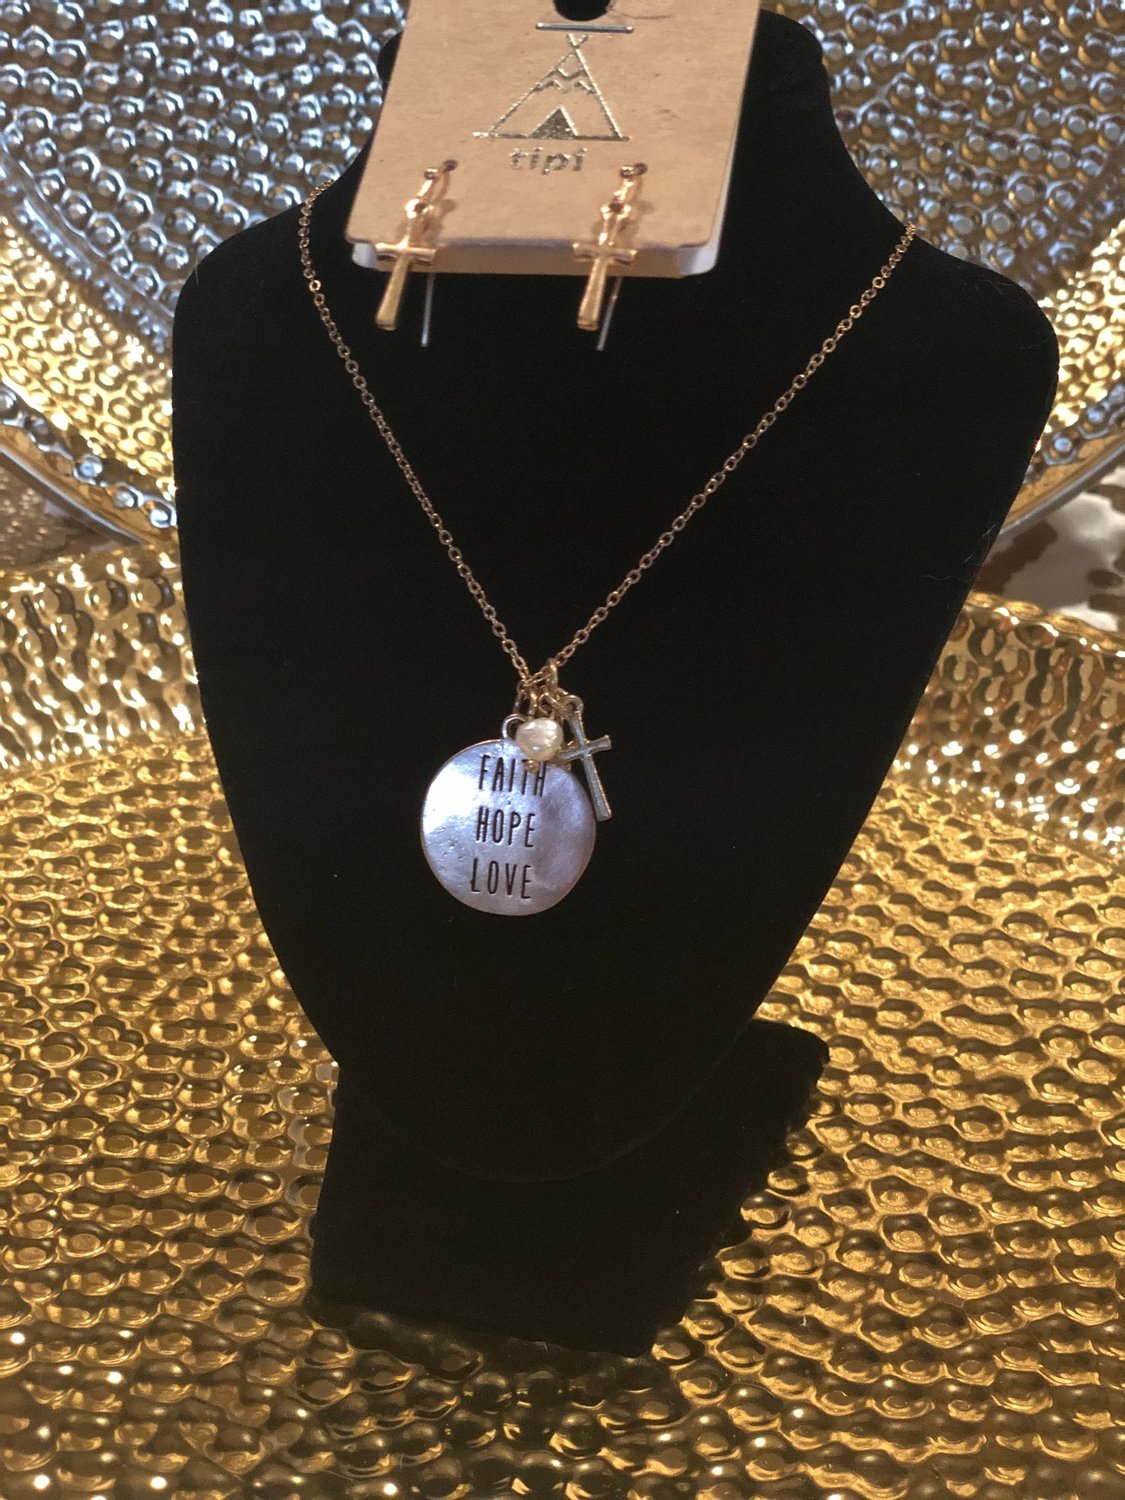 "Faith, Hope, Love" necklace and earrings set